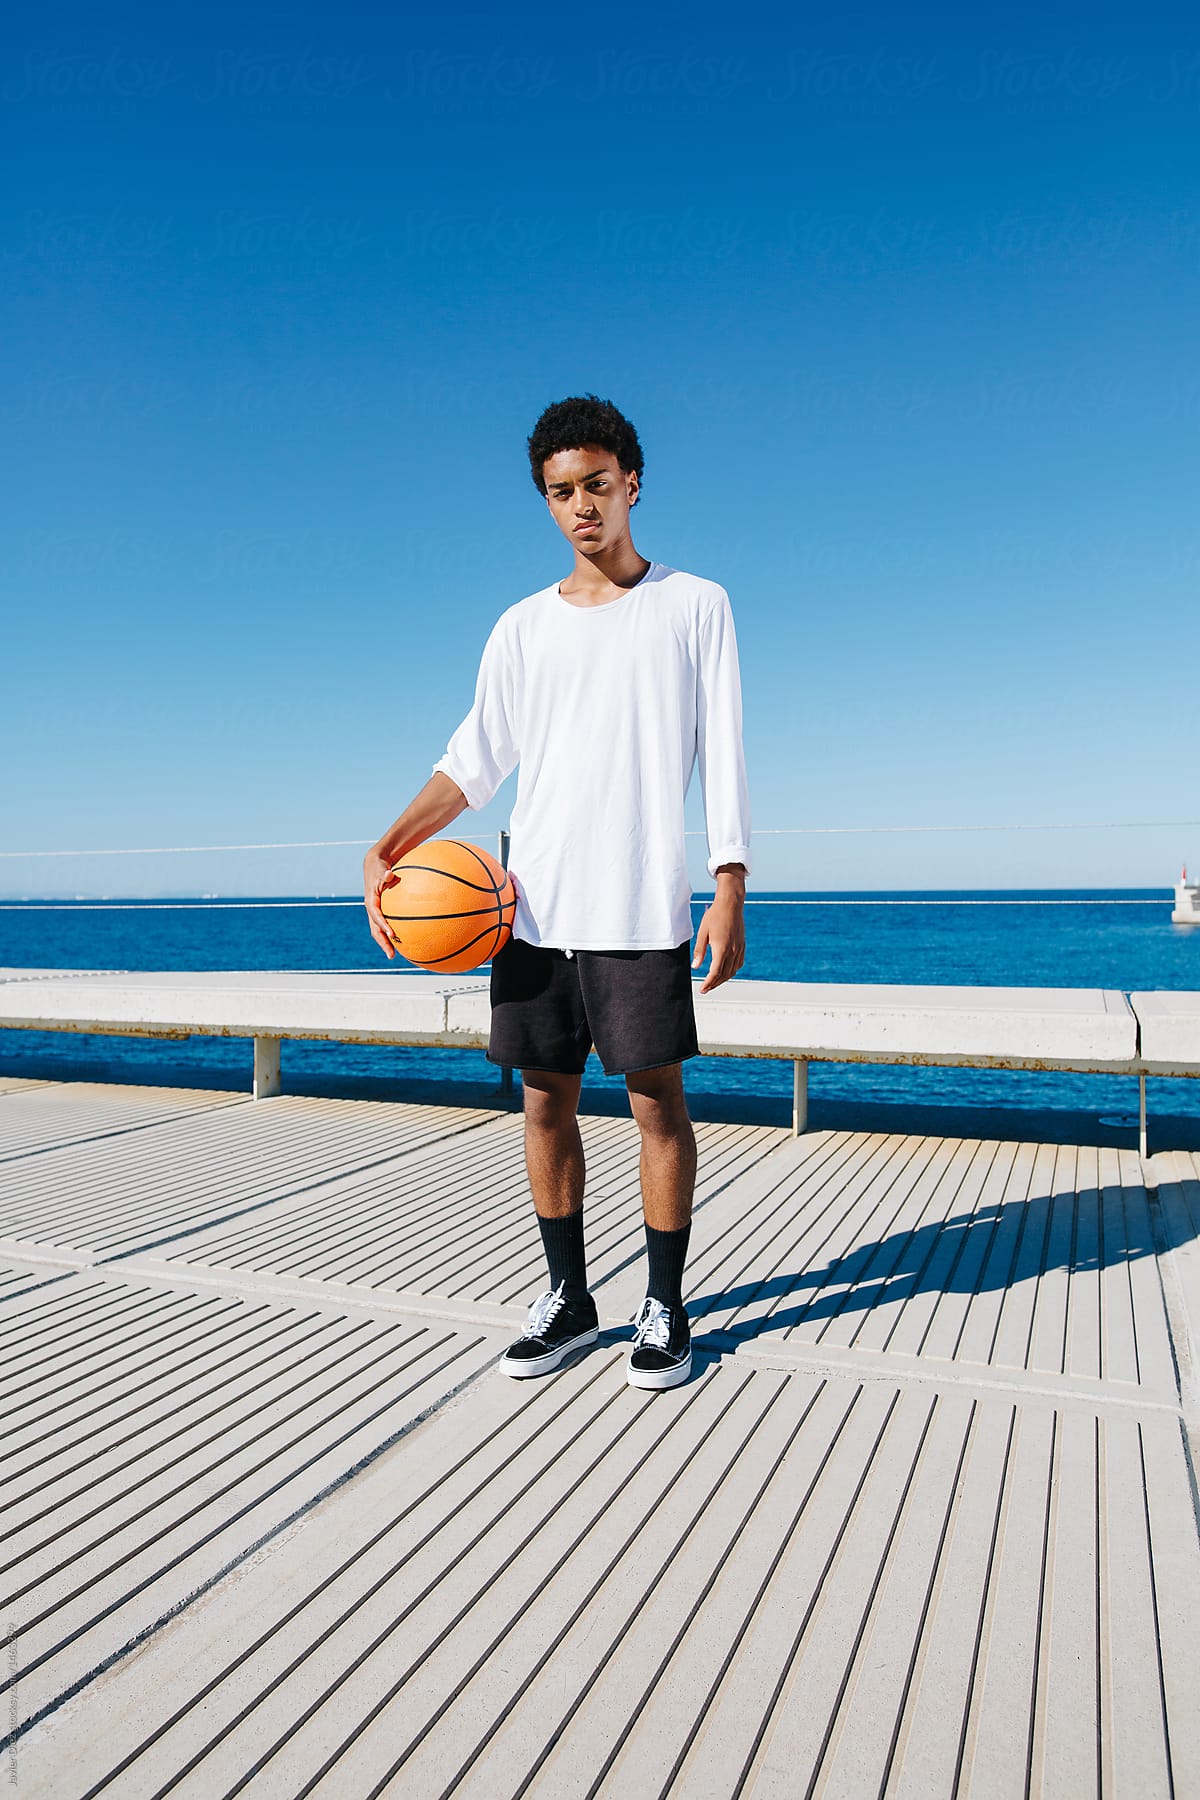 Basketball player at seaside